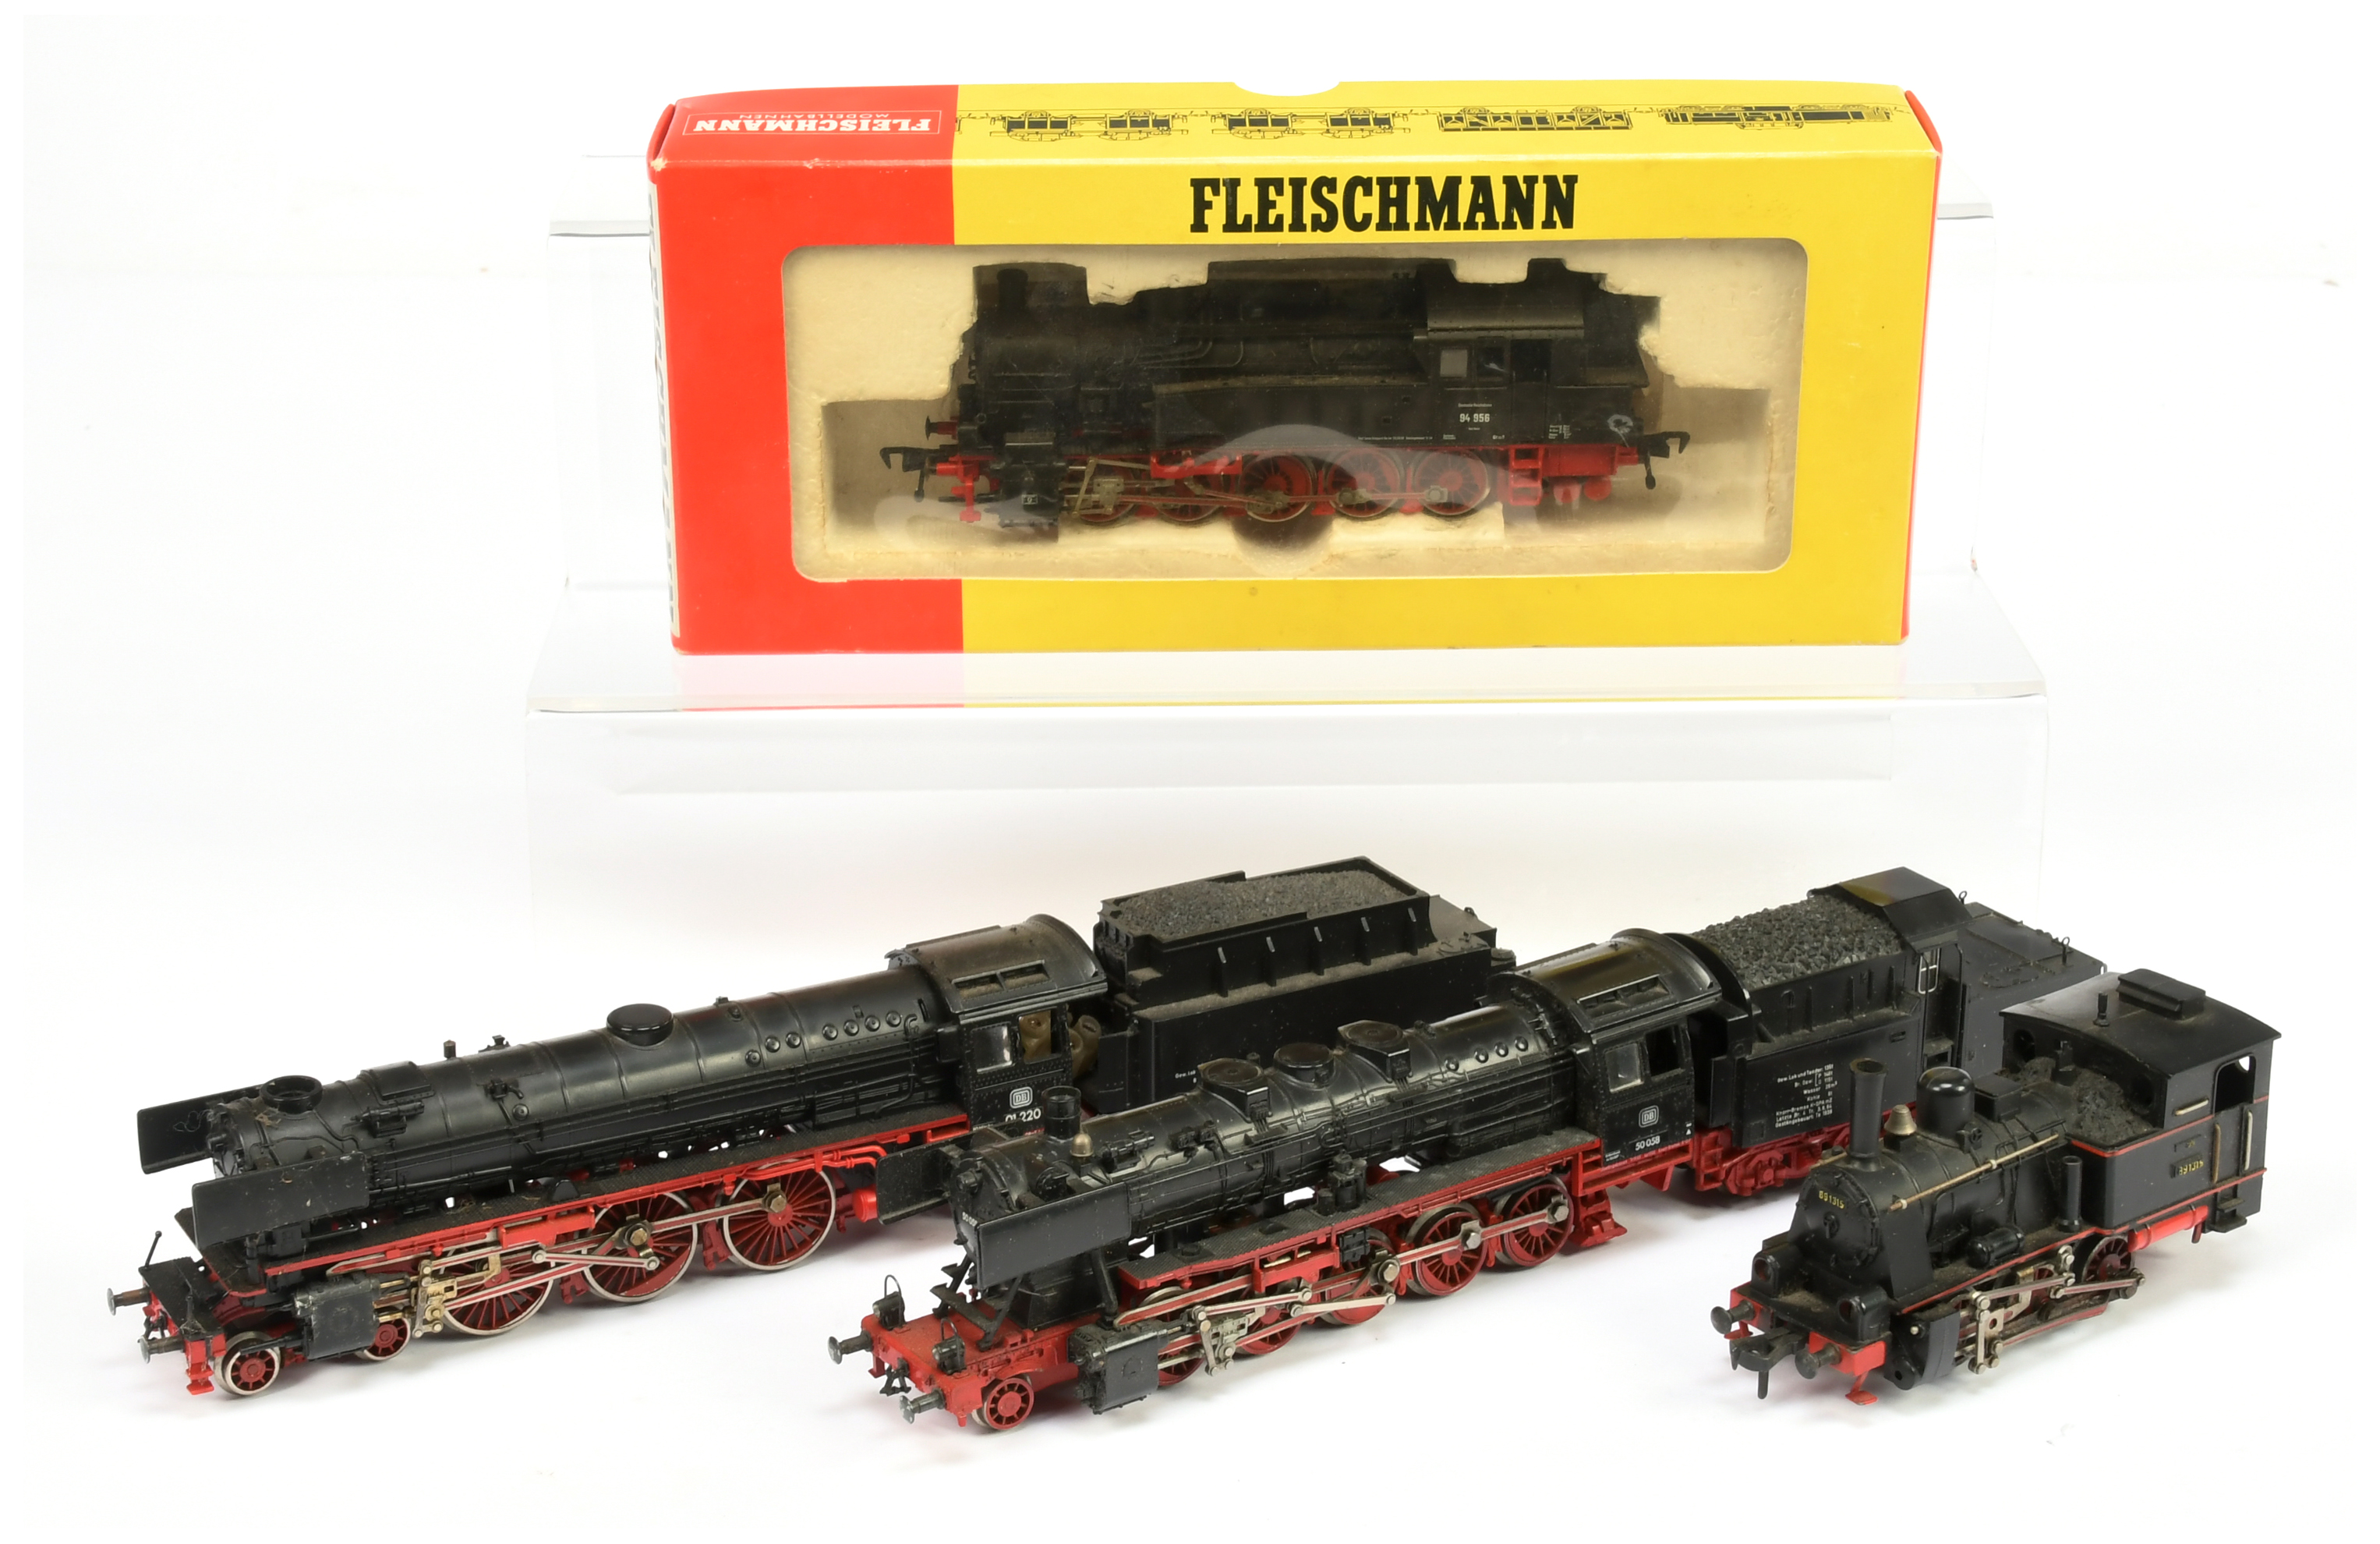 Fleischmann Ho Gauge group of Steam Locomotives to include 